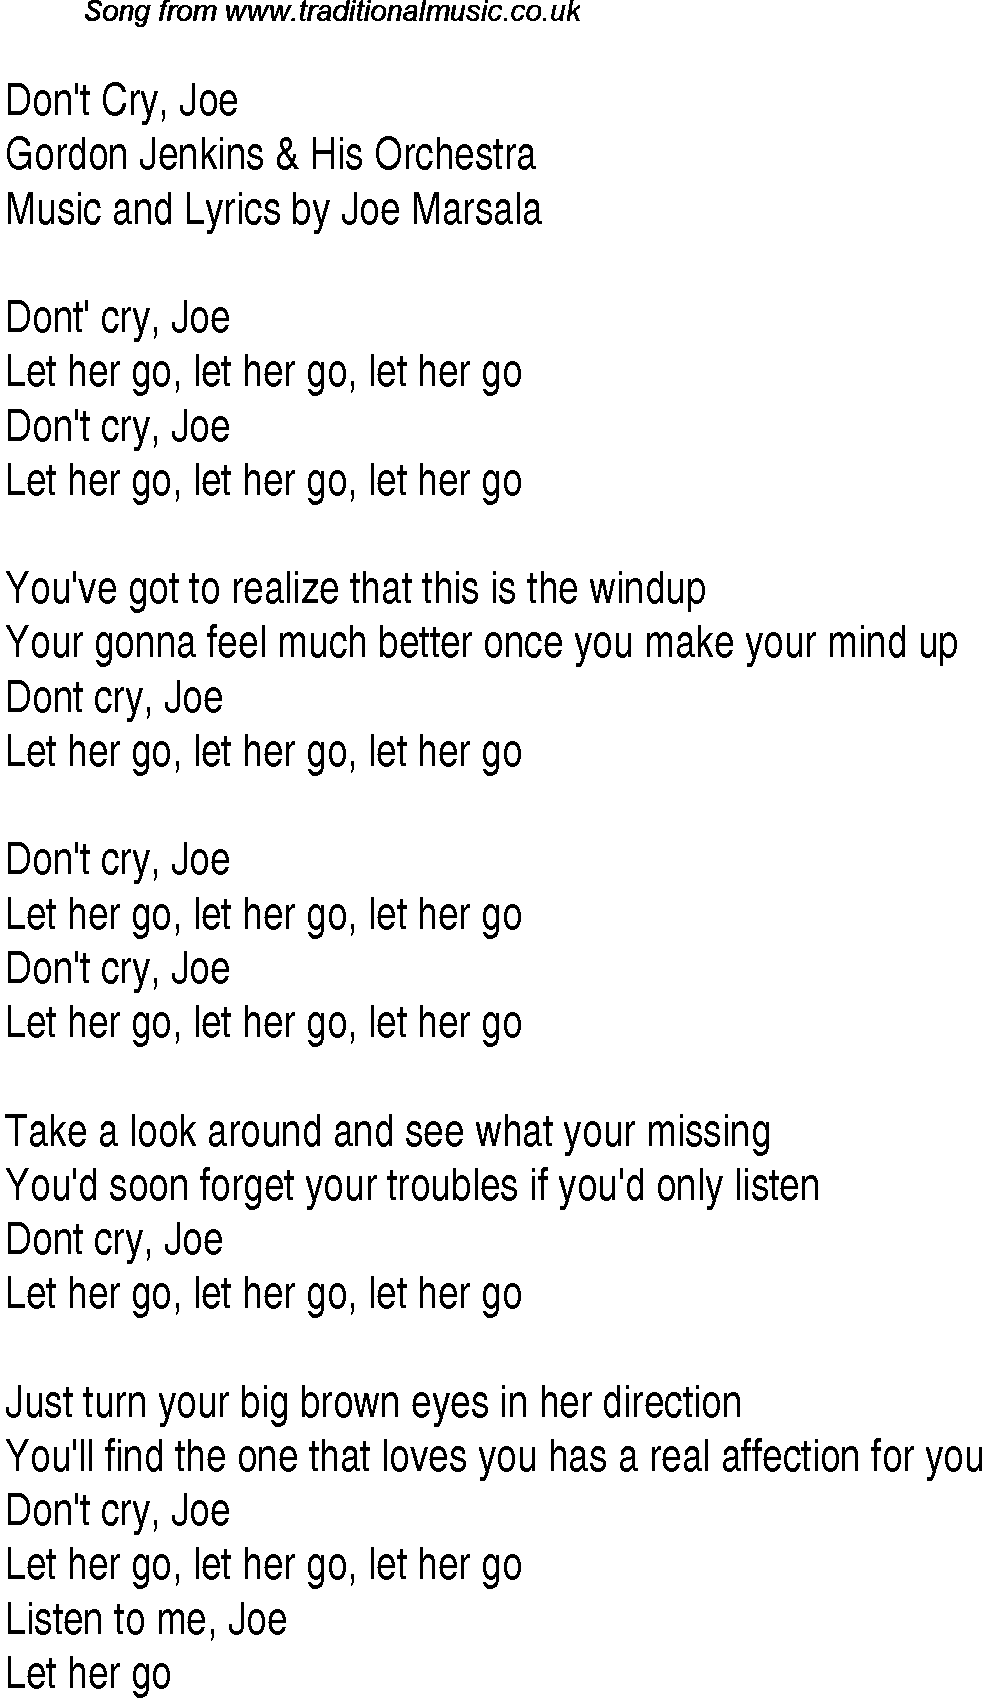 Music charts top songs 1949 - lyrics for Dont Cry Joe